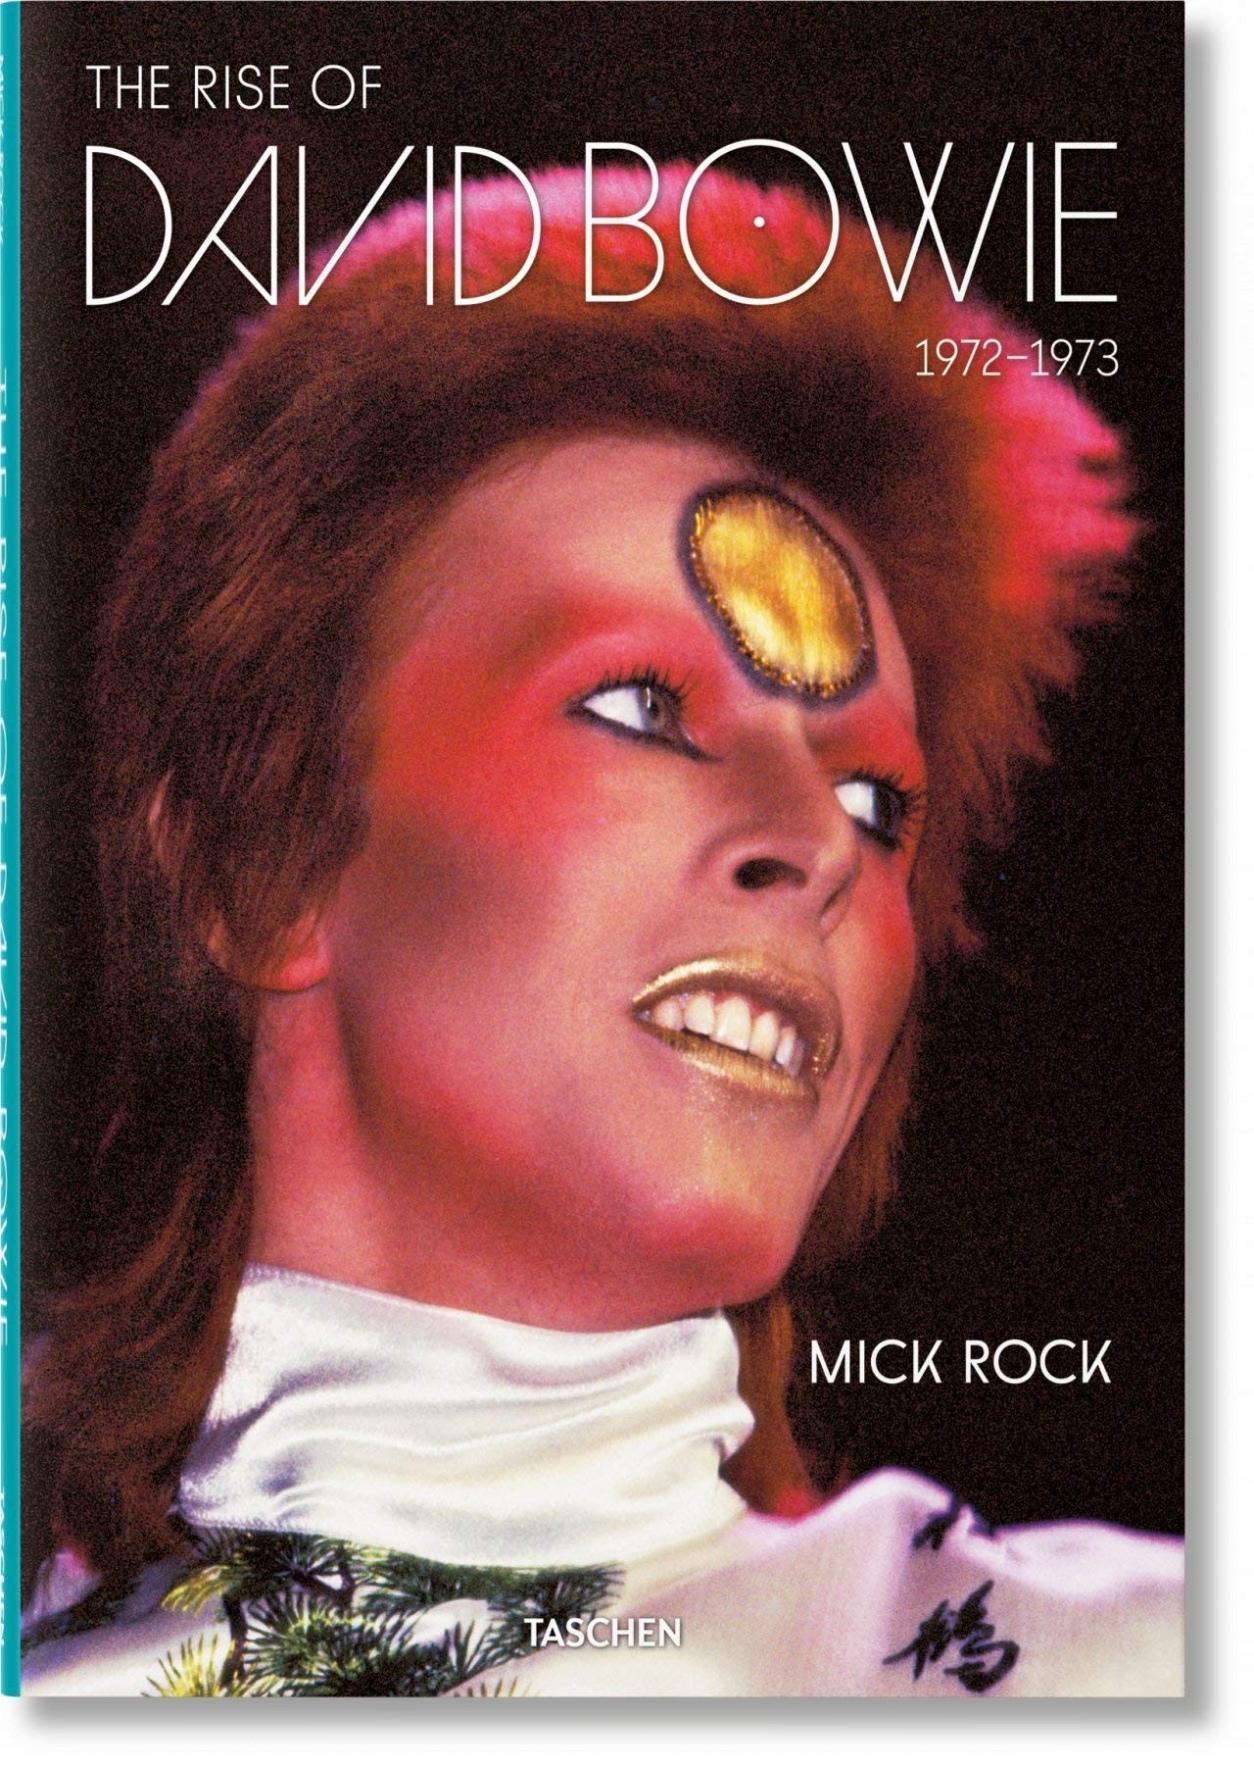 Hoskyns Barney, Bracewell Michael Mick Rock. the Rise of David Bowie, 1972-1973 